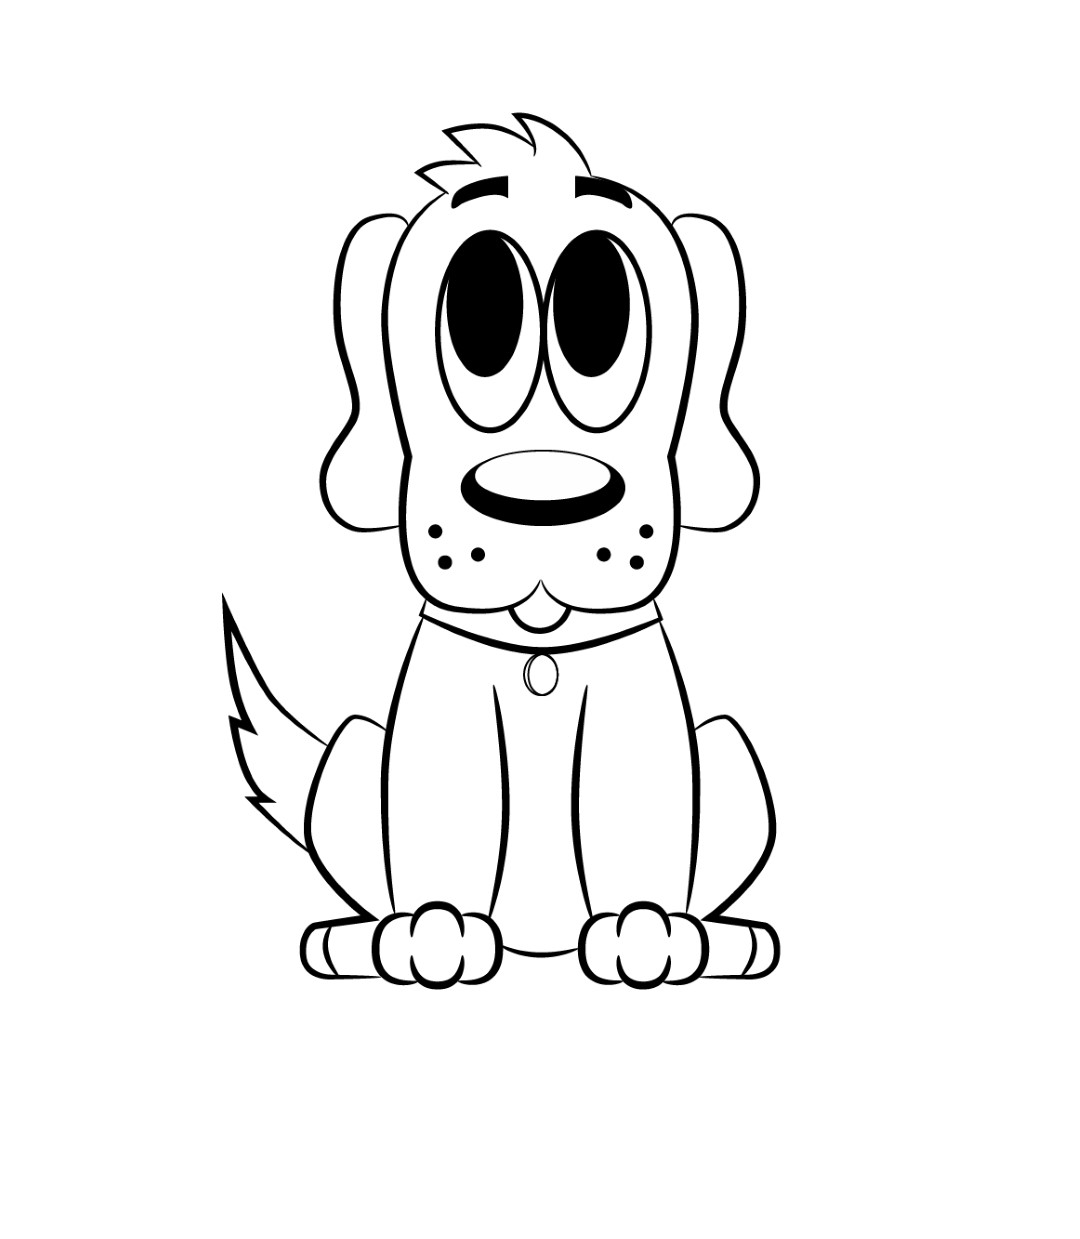 Free Dog Cartoon Drawings, Download Free Dog Cartoon Drawings png